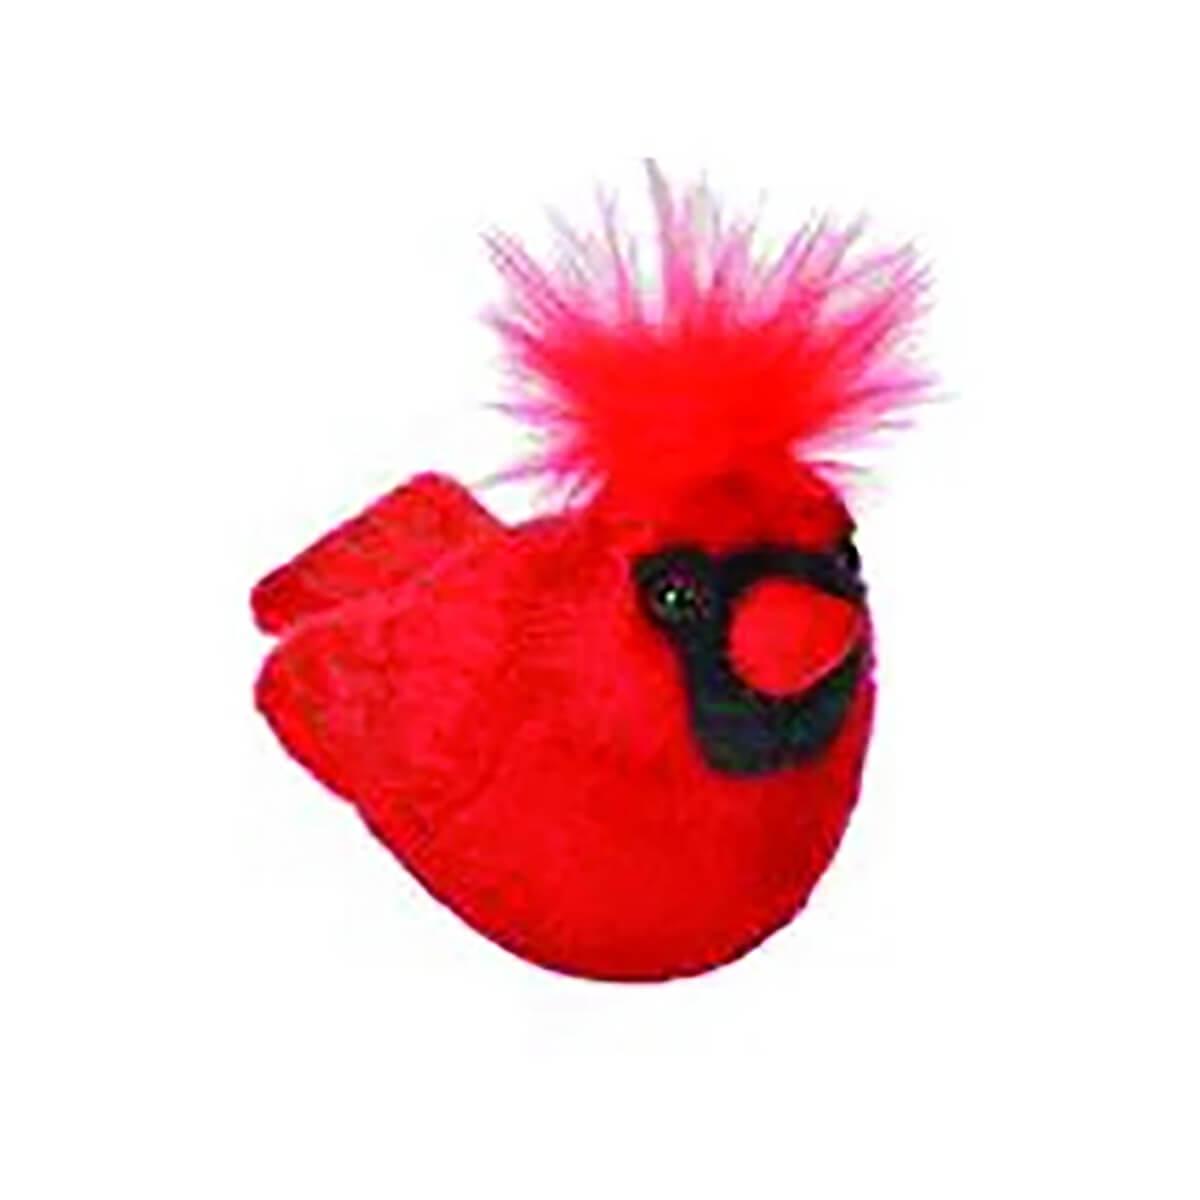  Audubon Ii Northern Cardinal Stuffed Animal Plush Toy - 5 Inch